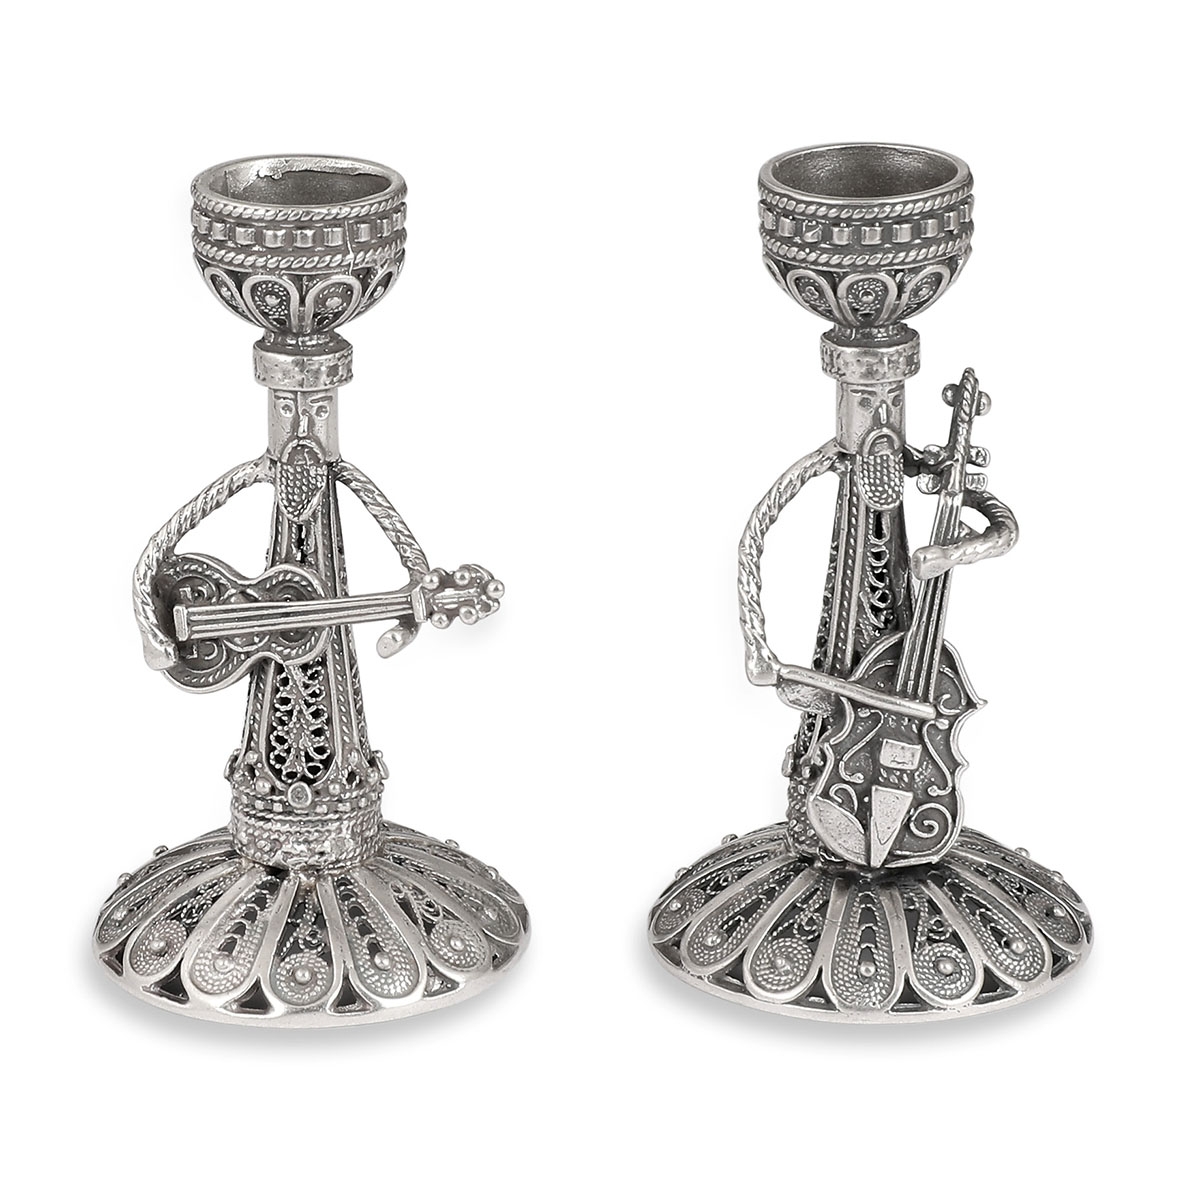 Traditional Yemenite Art Handcrafted Sterling Silver Klezmer Musician Candlesticks With Filigree Design - 1